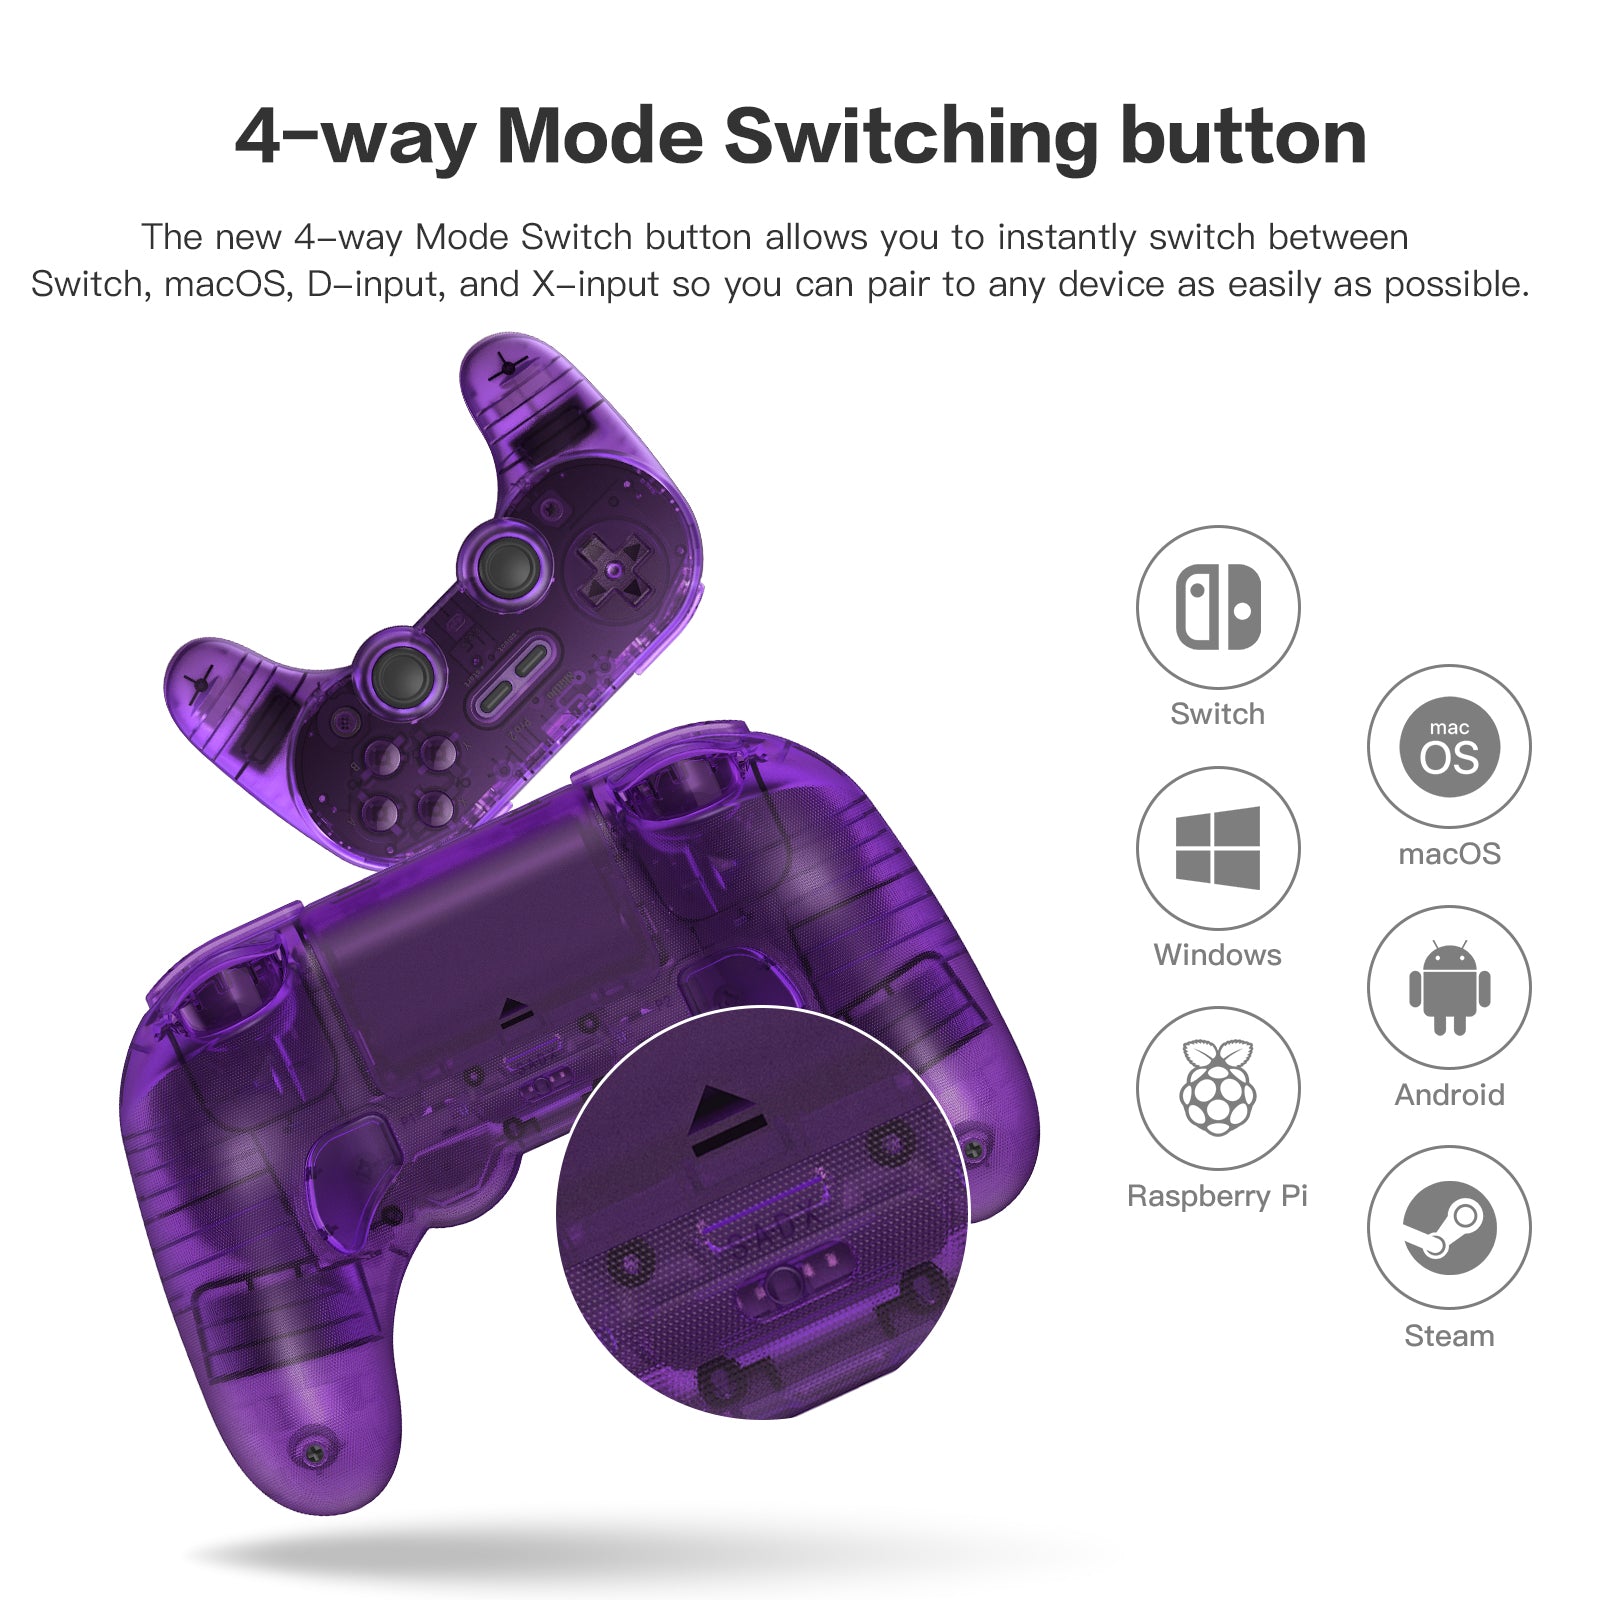 Hallplay 8BitDo® Pro 2 Bluetooth Controller (Special Edition)-Purple